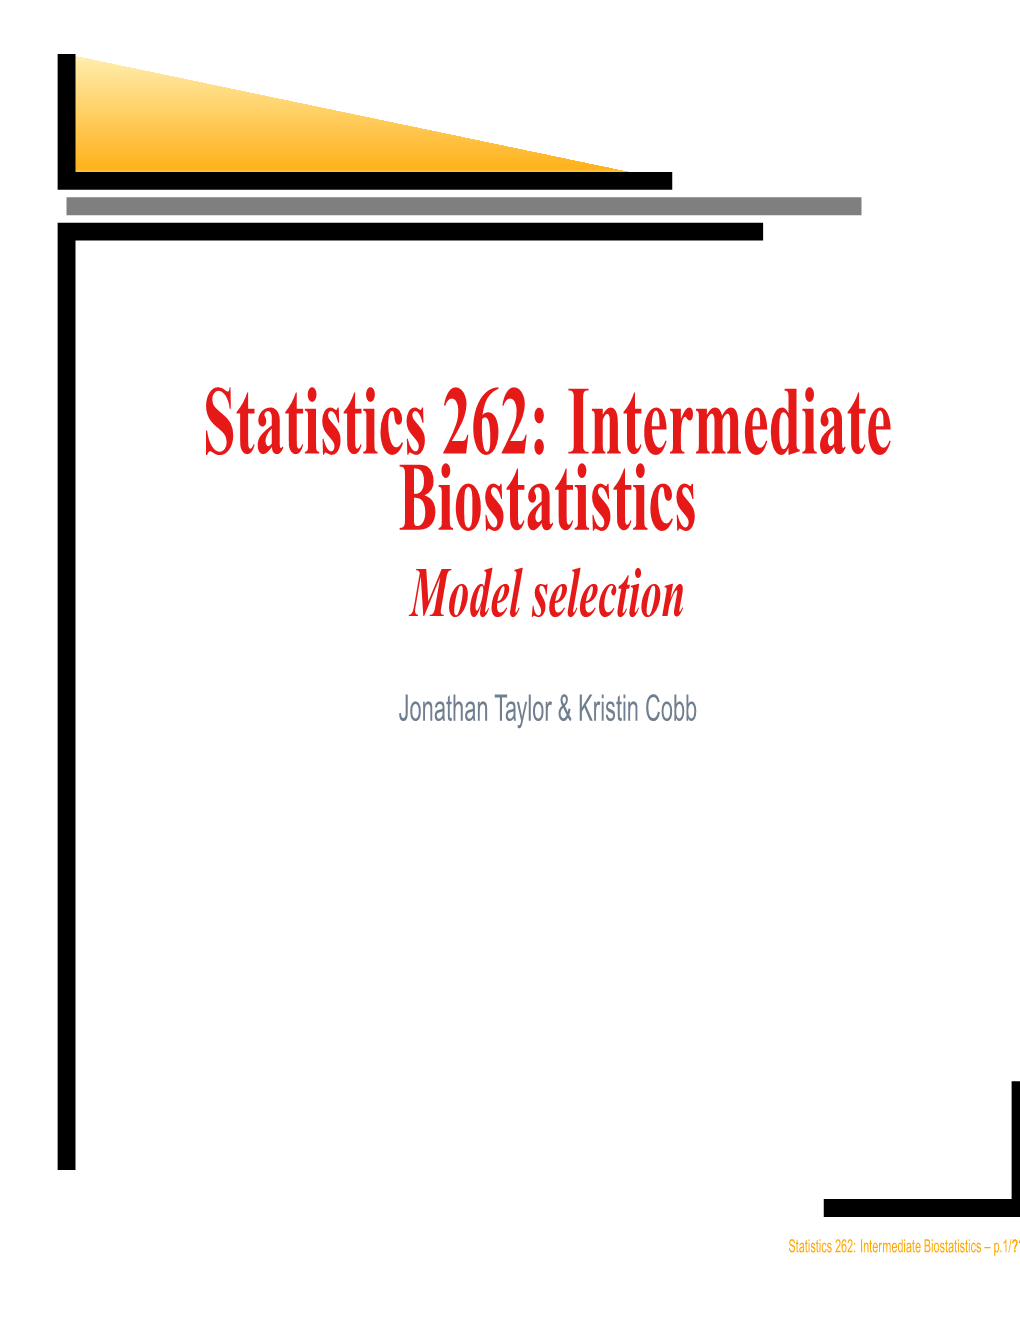 Statistics 262: Intermediate Biostatistics Model Selection